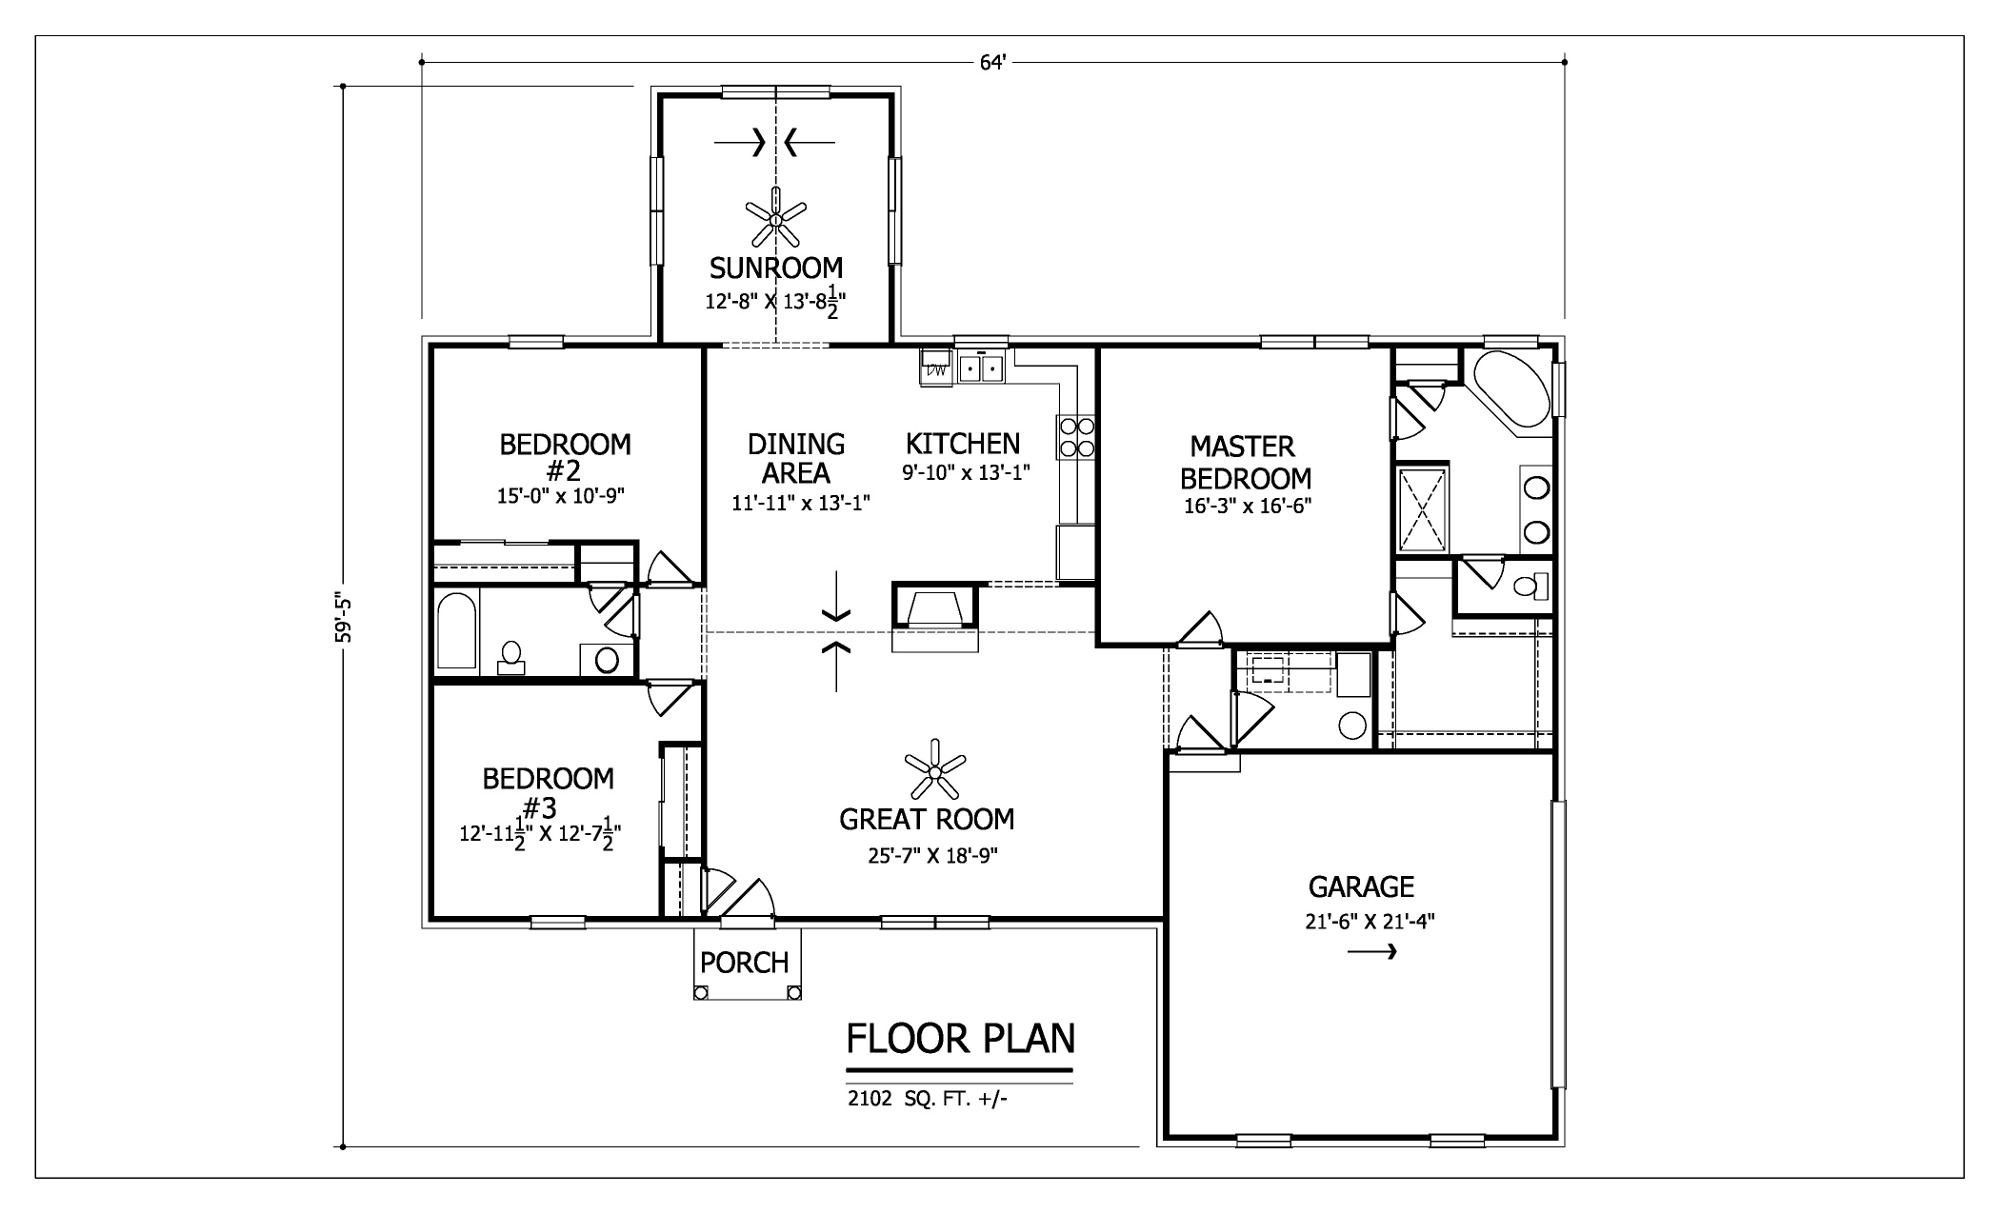 Featured Home Design | The Brooke 210 Brooke Floor1